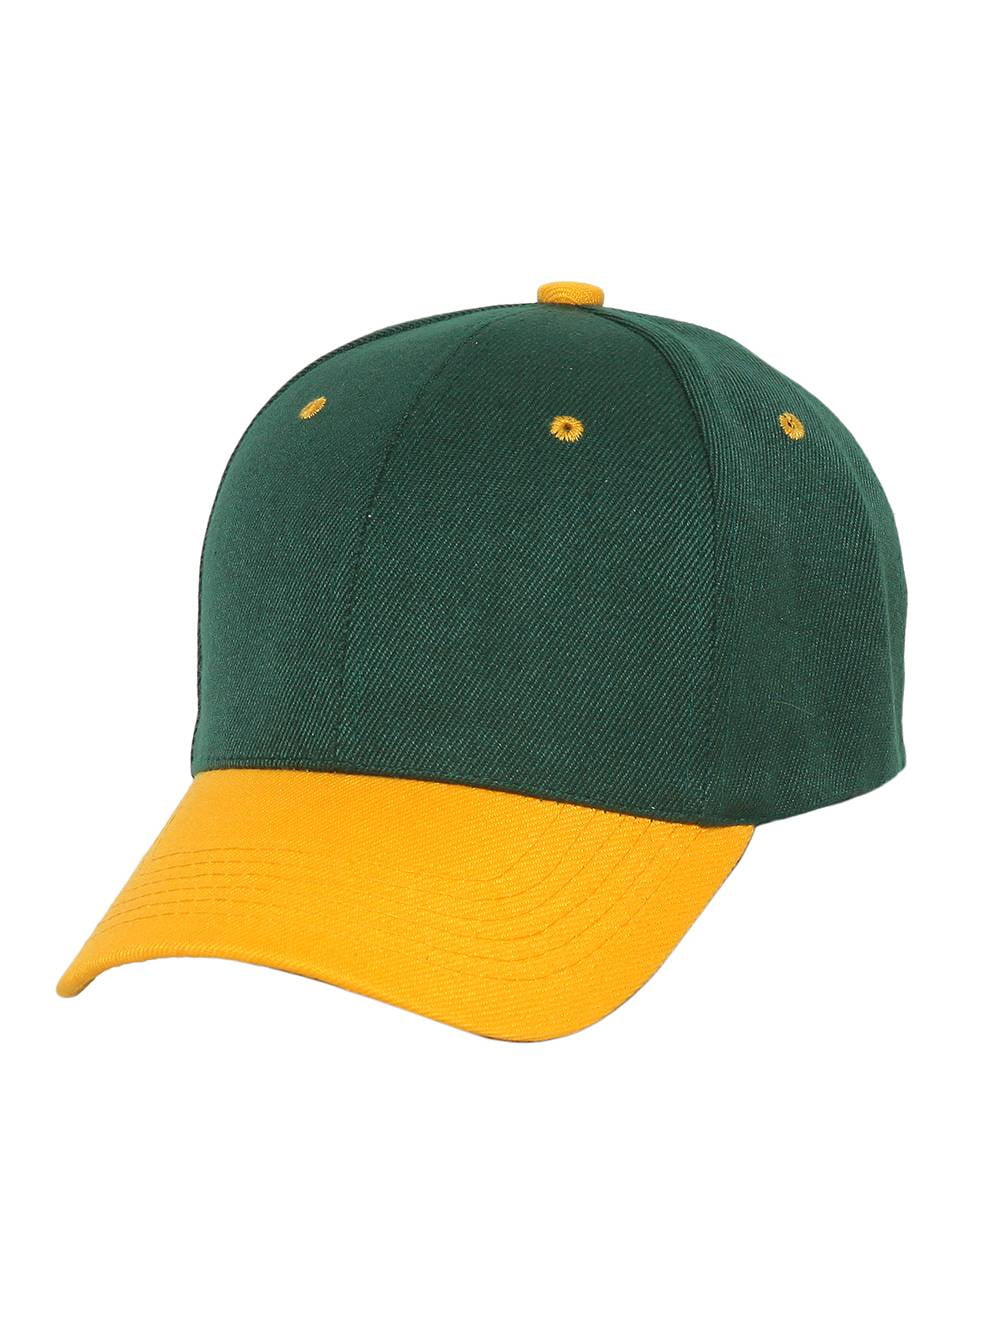 Two-Tone Adjustable Baseball Yellow Cap, Green